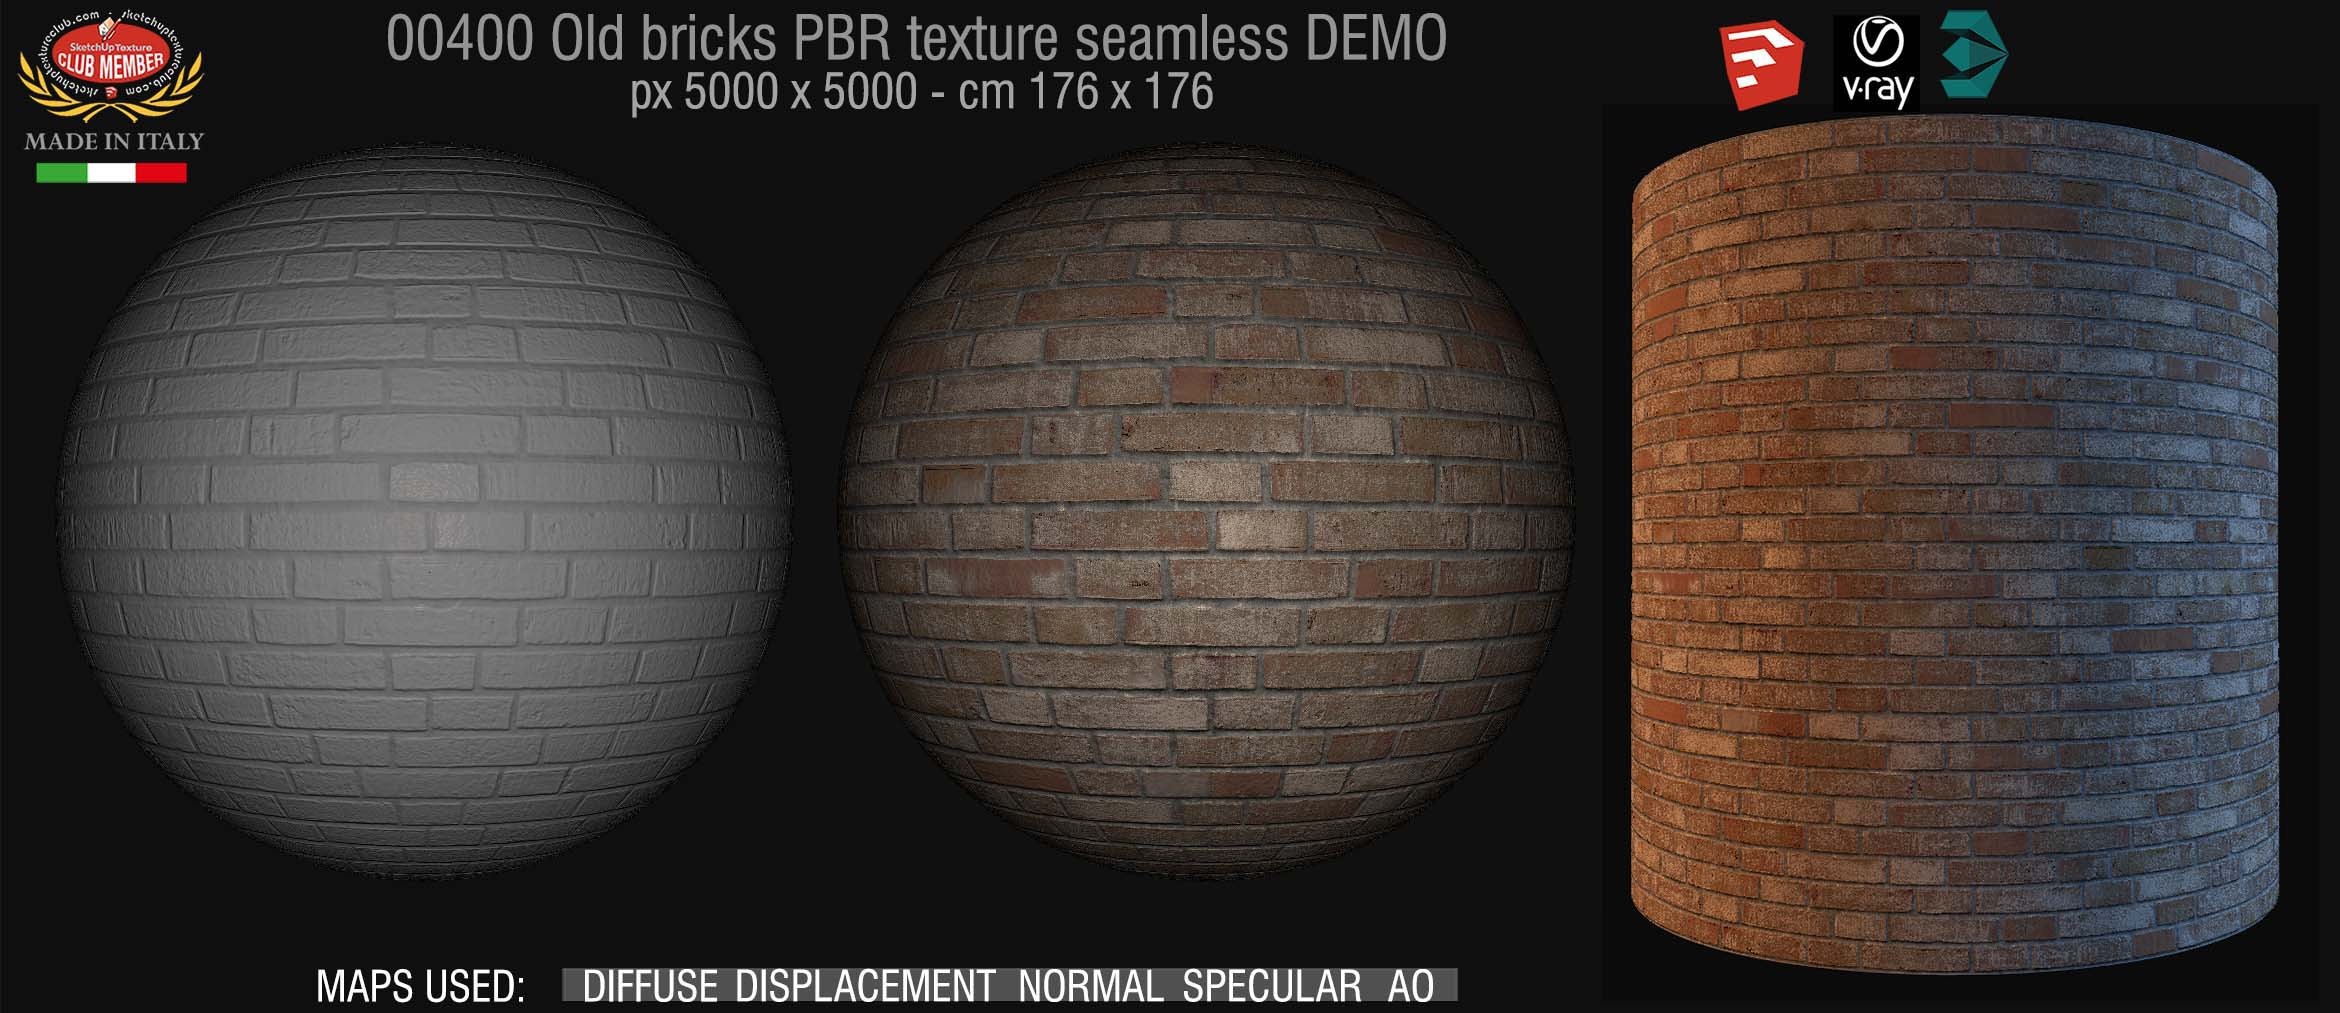 00400 Old bricks PBR texture seamless DEMO